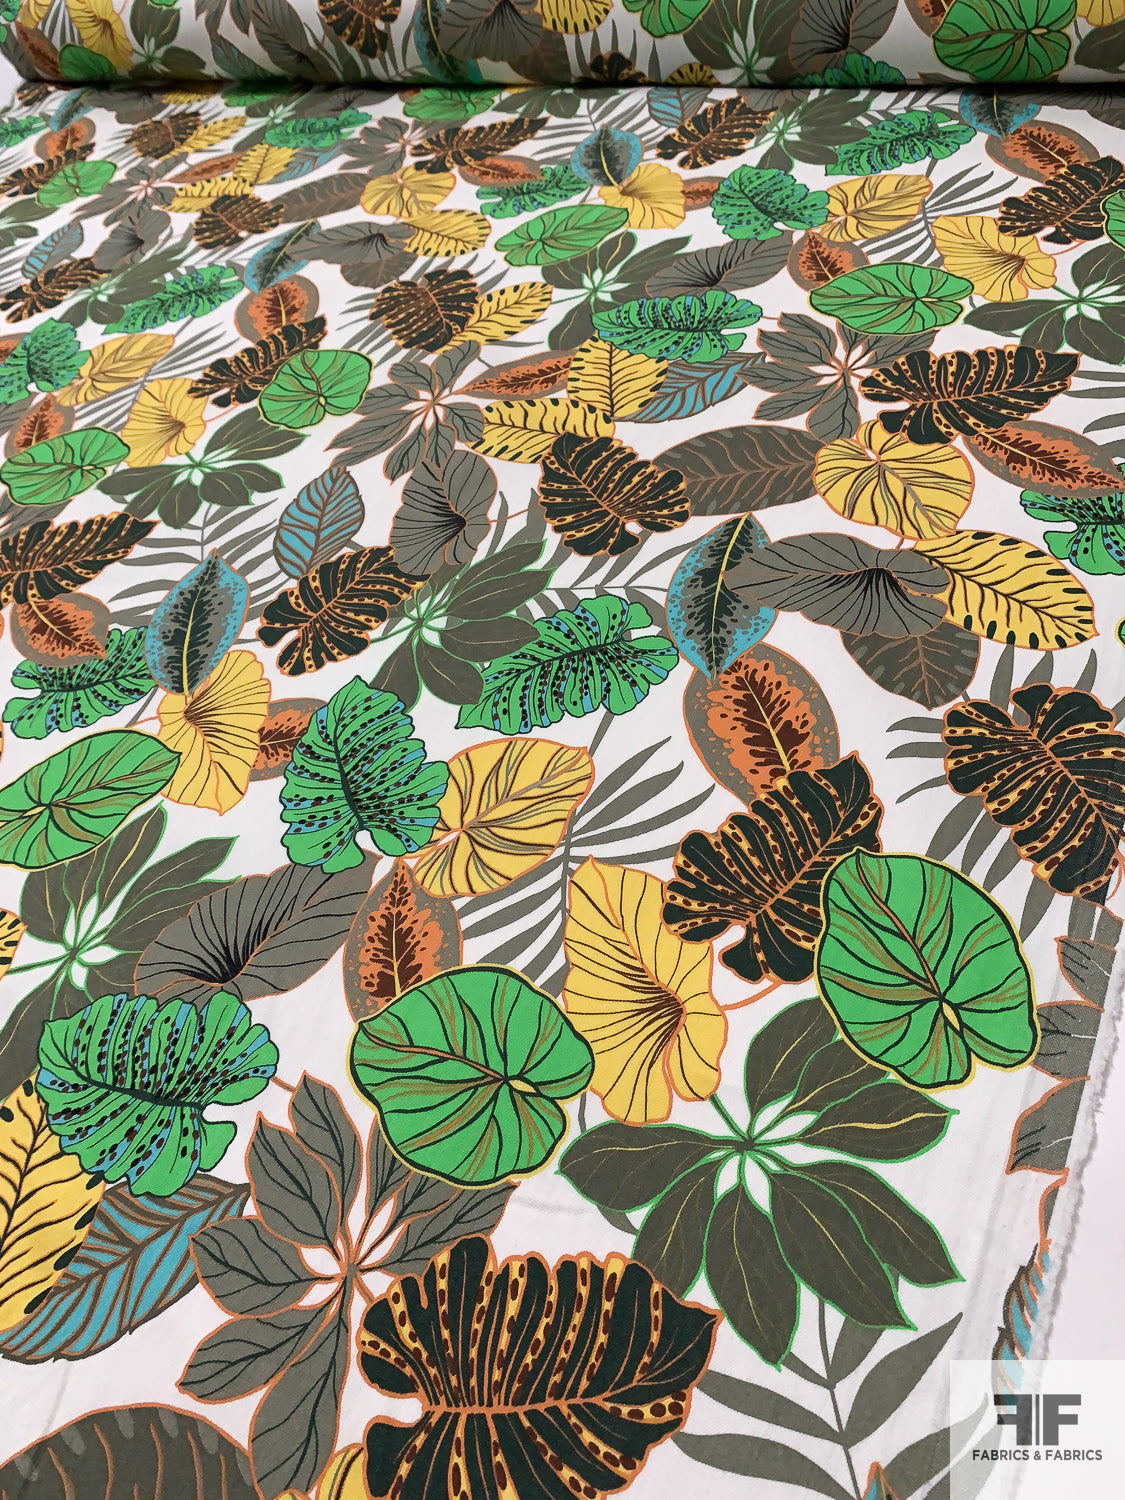 Tropical Leaf Printed Stretch Cotton Twill - Green / Khaki Green / Yellow / Orange / Off-White